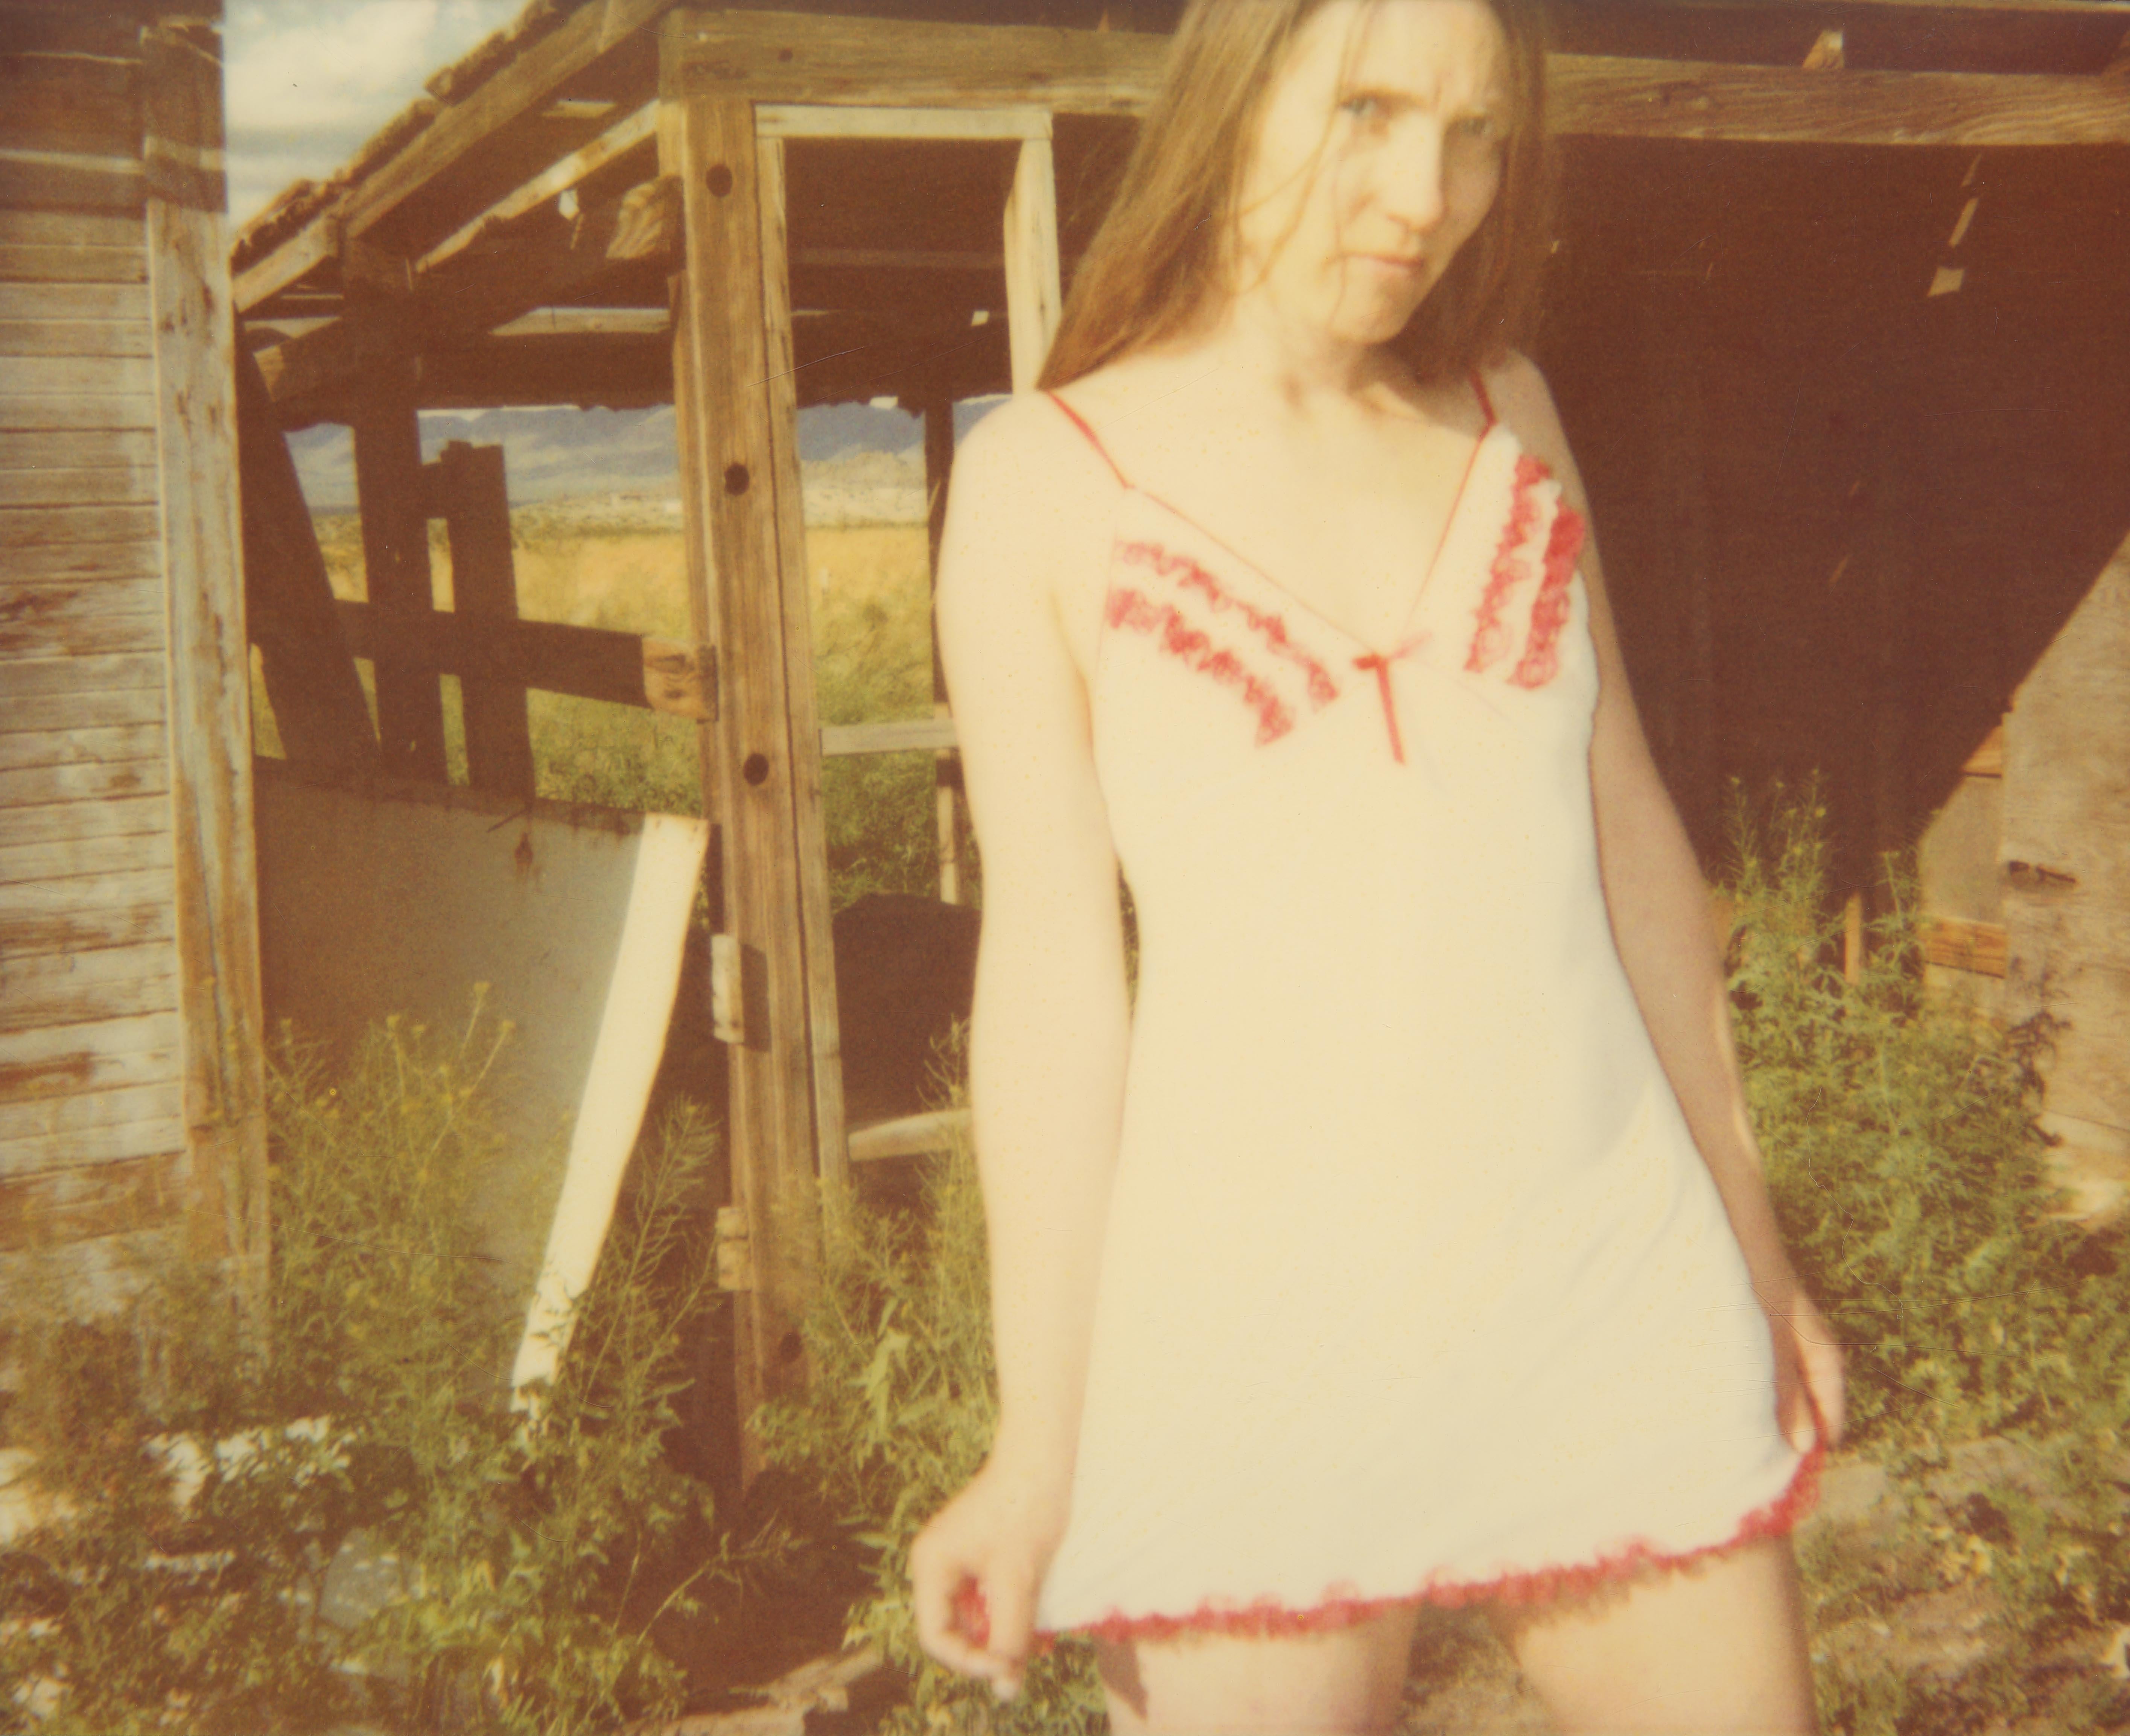 Stevie's new Dress (Sidewinder) - 21st Century, Polaroid, Contemporary, Women